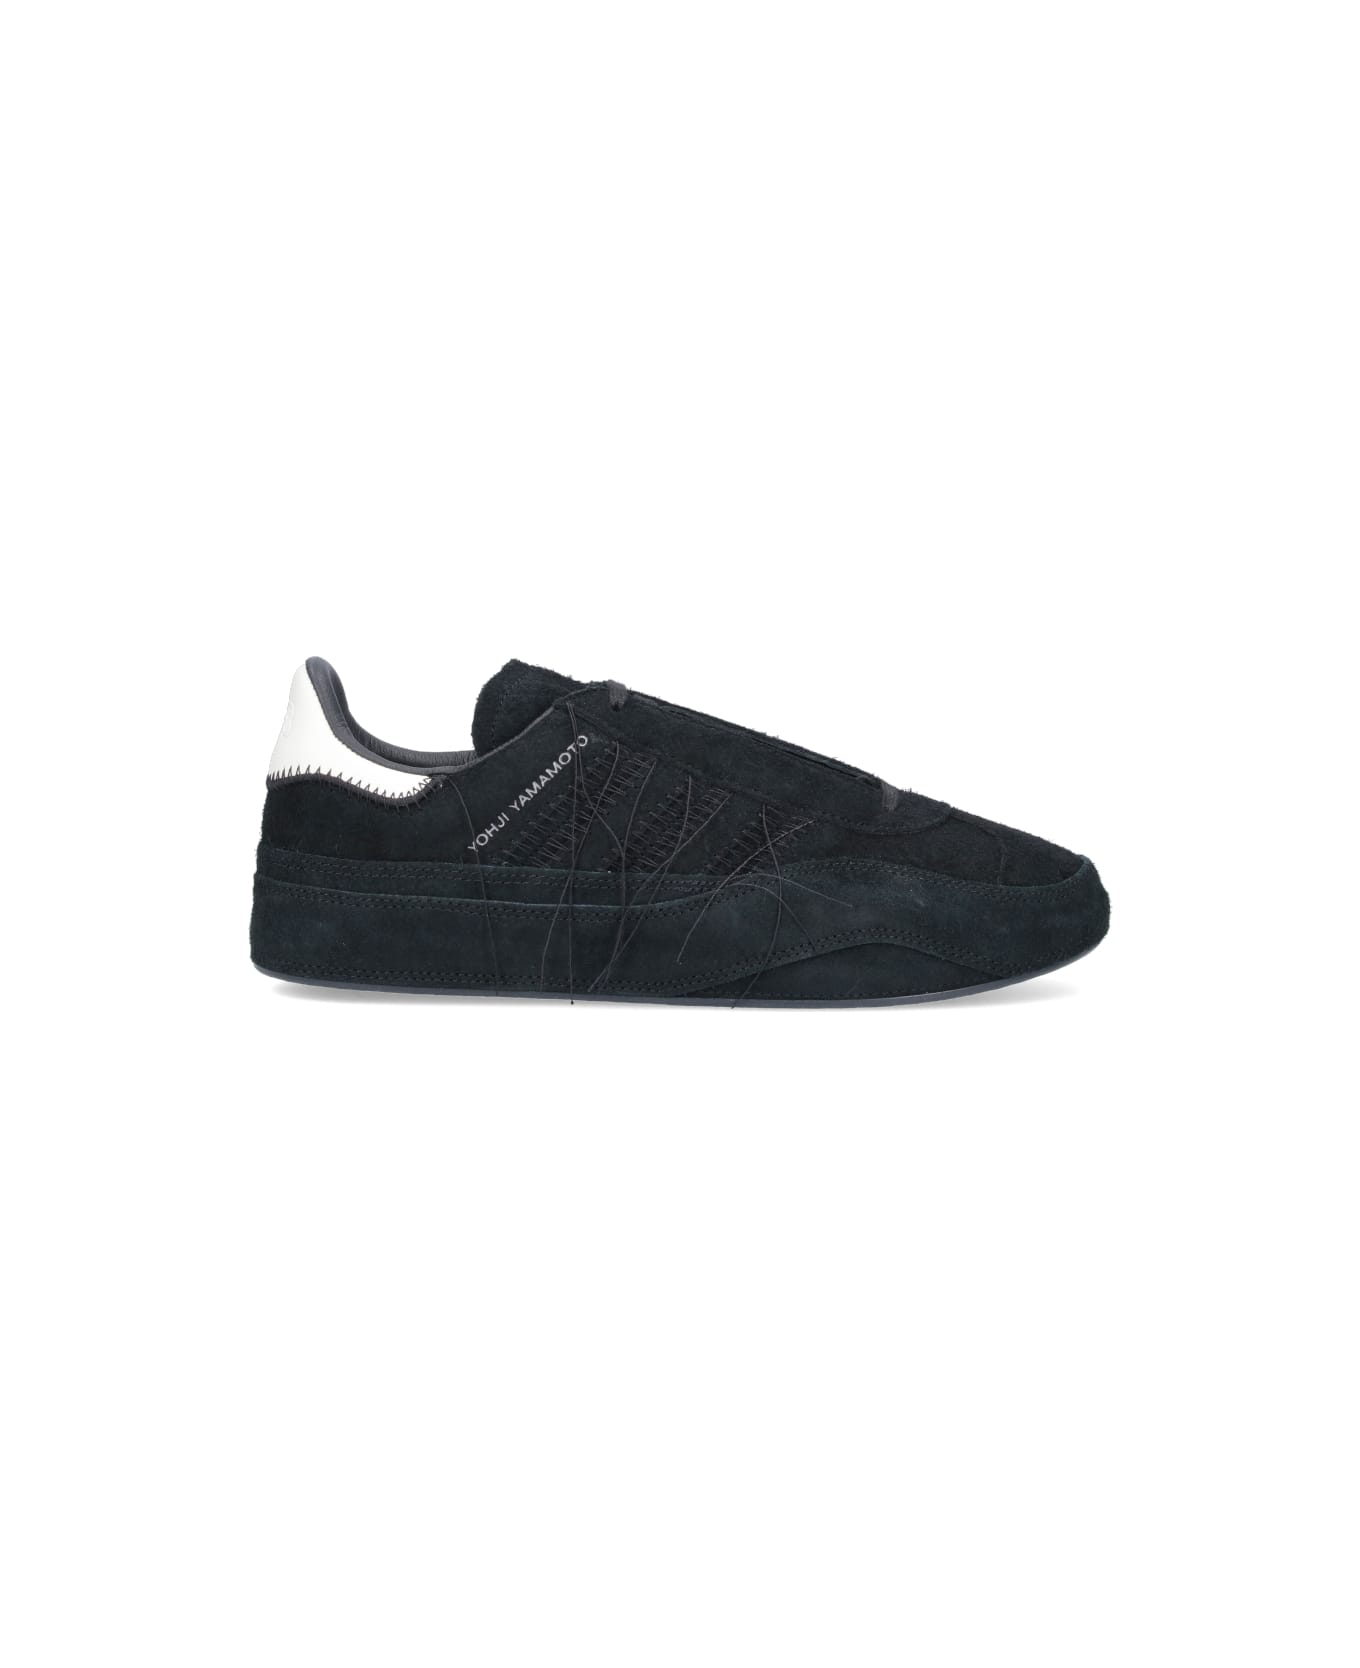 Y-3 "gazelle" Sneakers - Black  